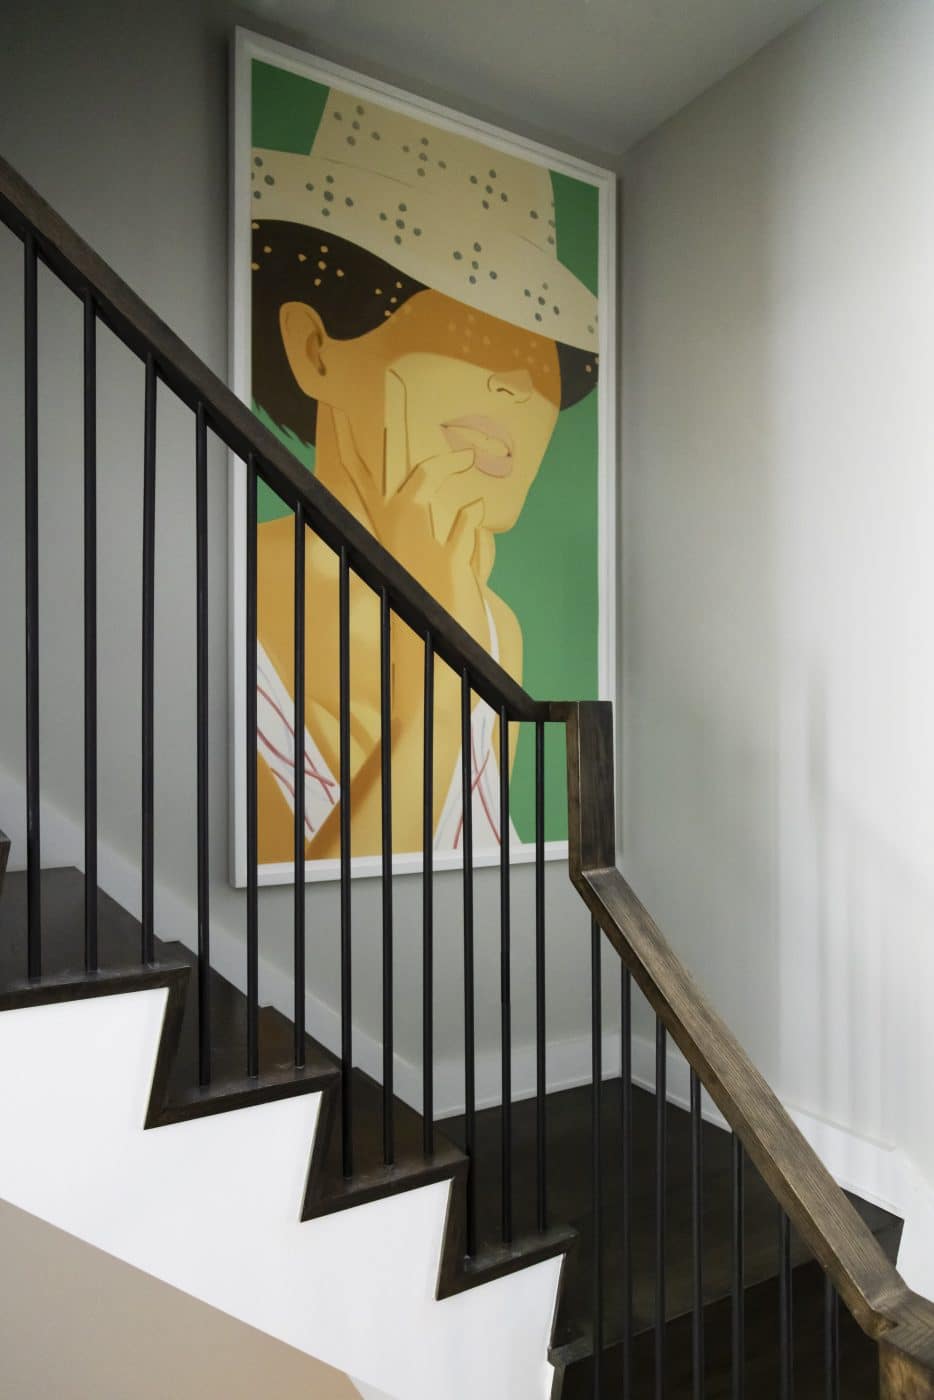 Williamsburg, Brooklyn, stairwell with Alex Katz art, designed by White Arrow.